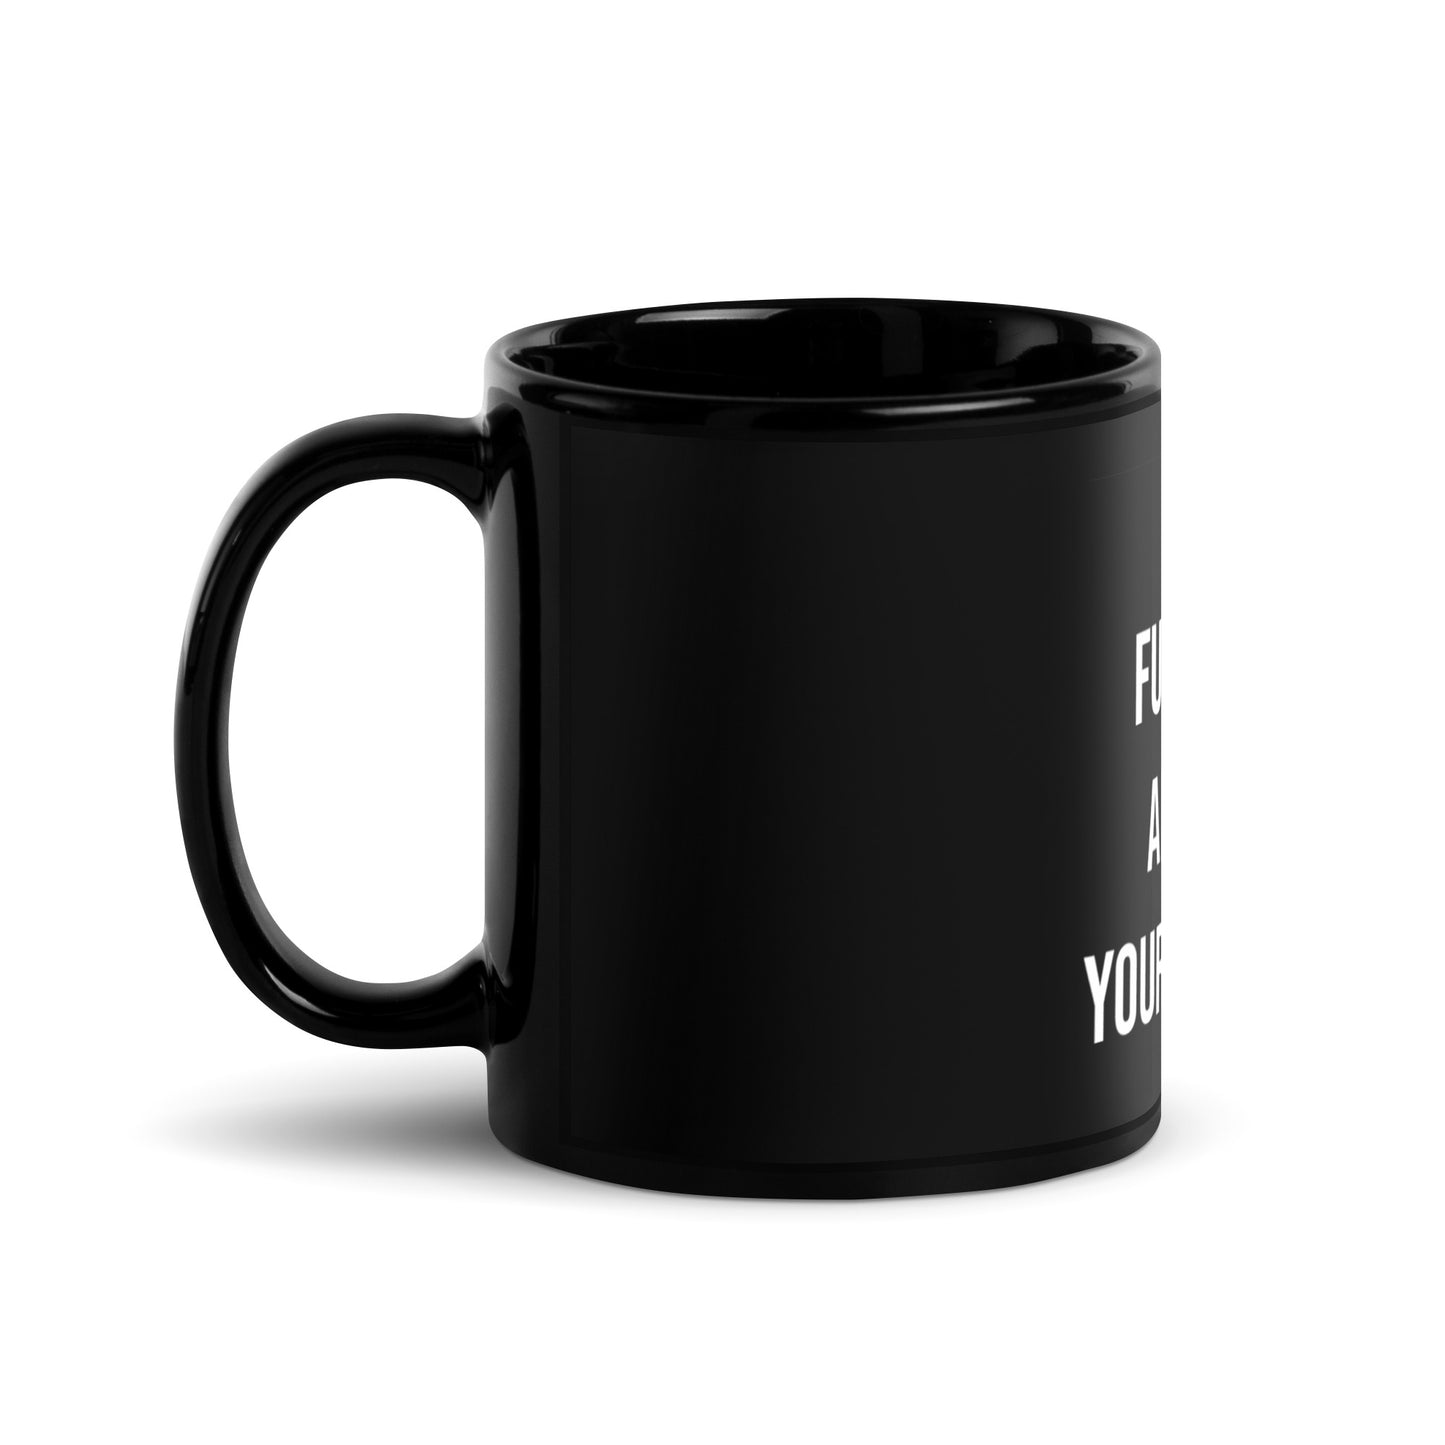 The FBANYF Black Glossy Mug